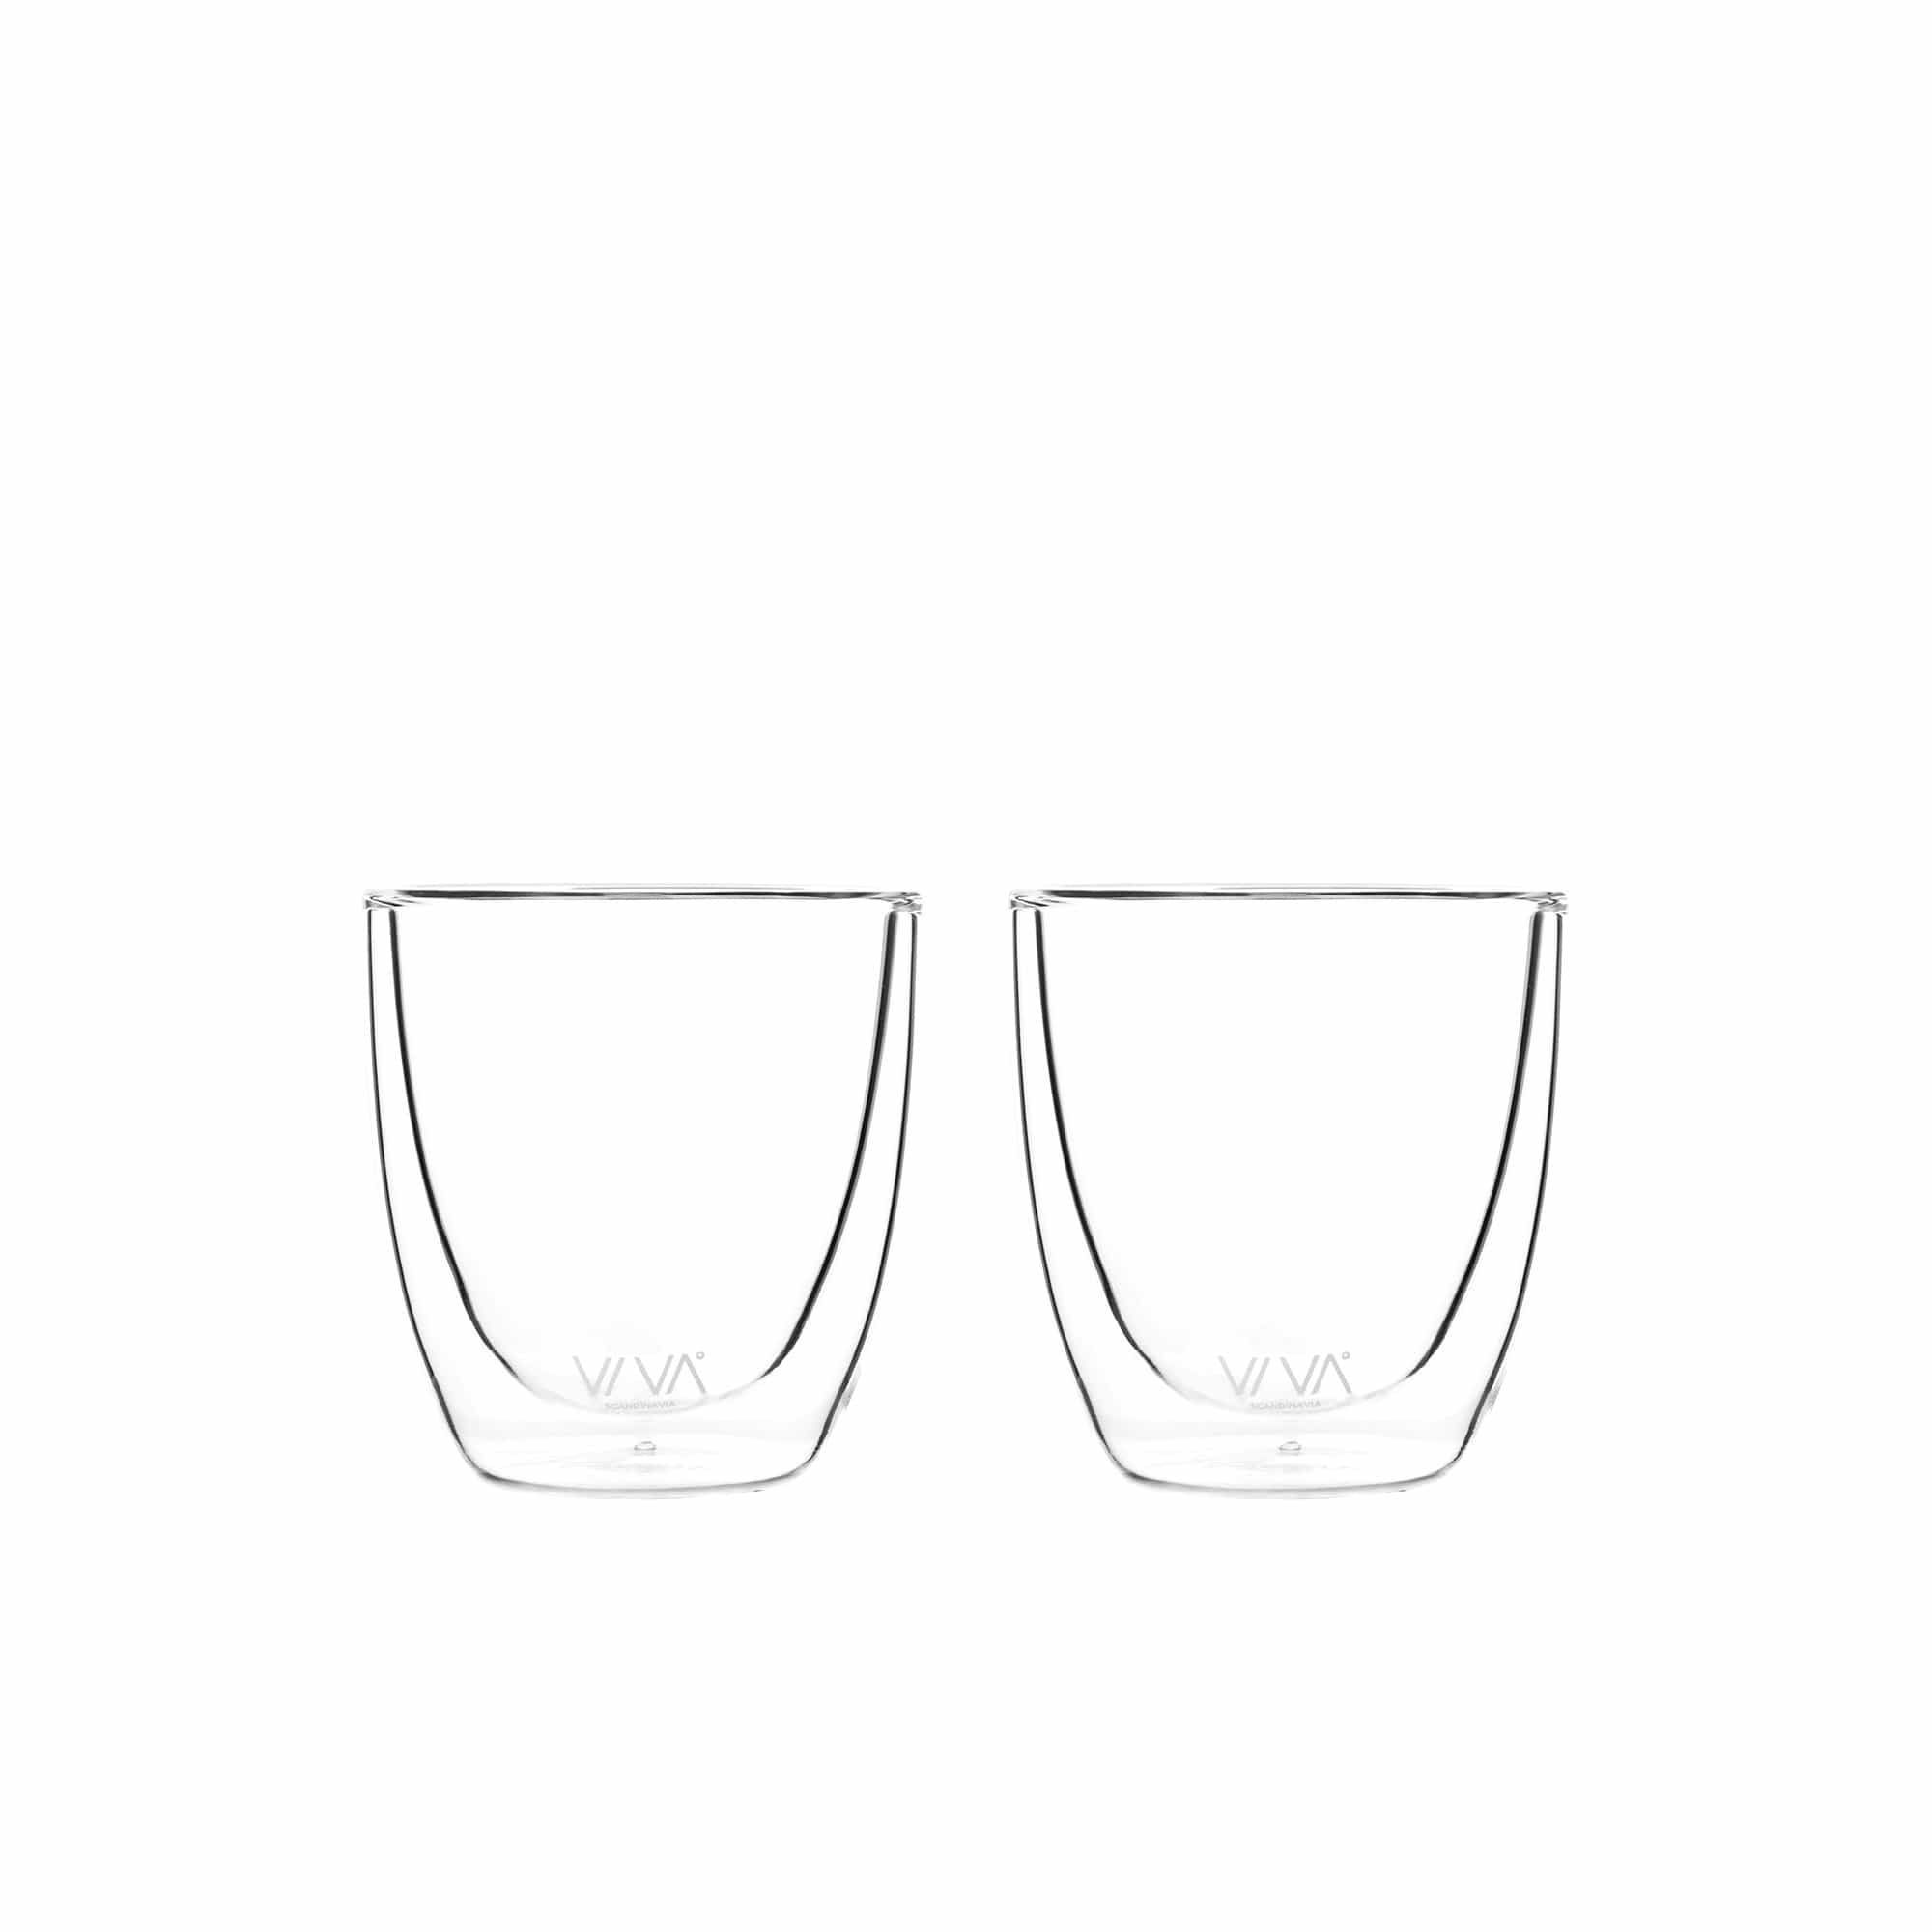 Lauren™ Double Walled Glasses - Set of 2 - 3.3 Oz Cups & Mugs VIVA Scandinavia 